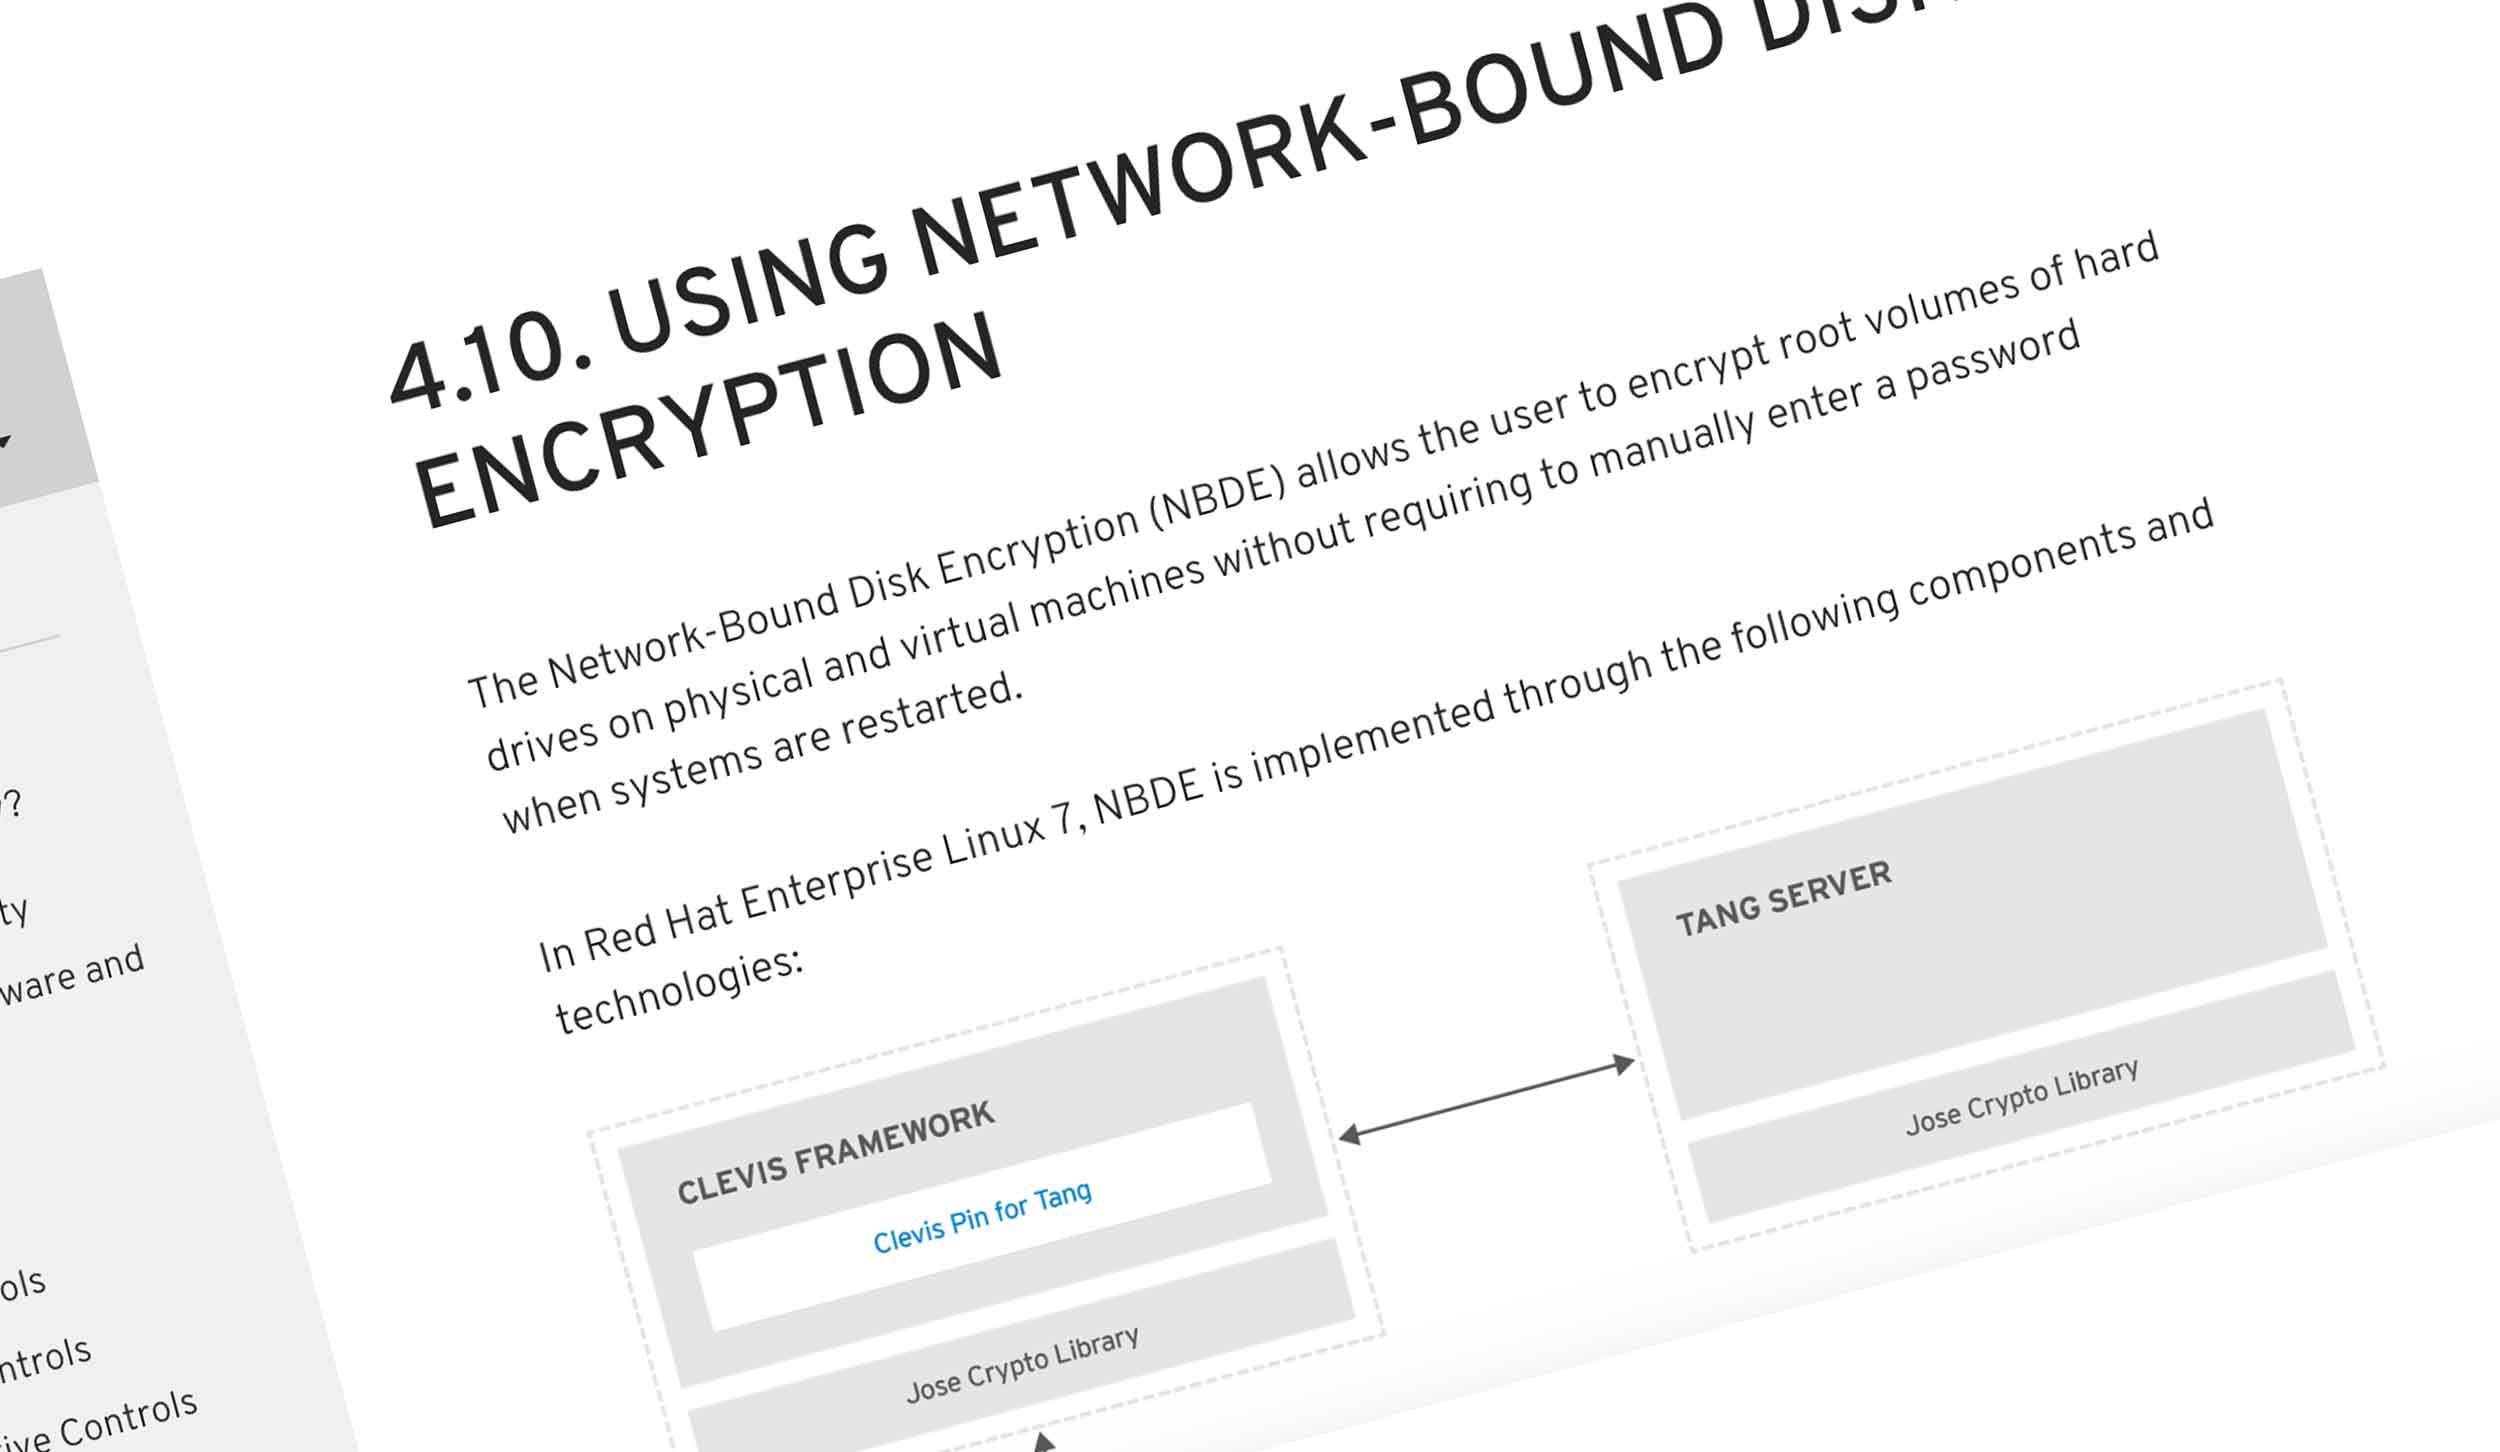 Network Bound Disk Encryption